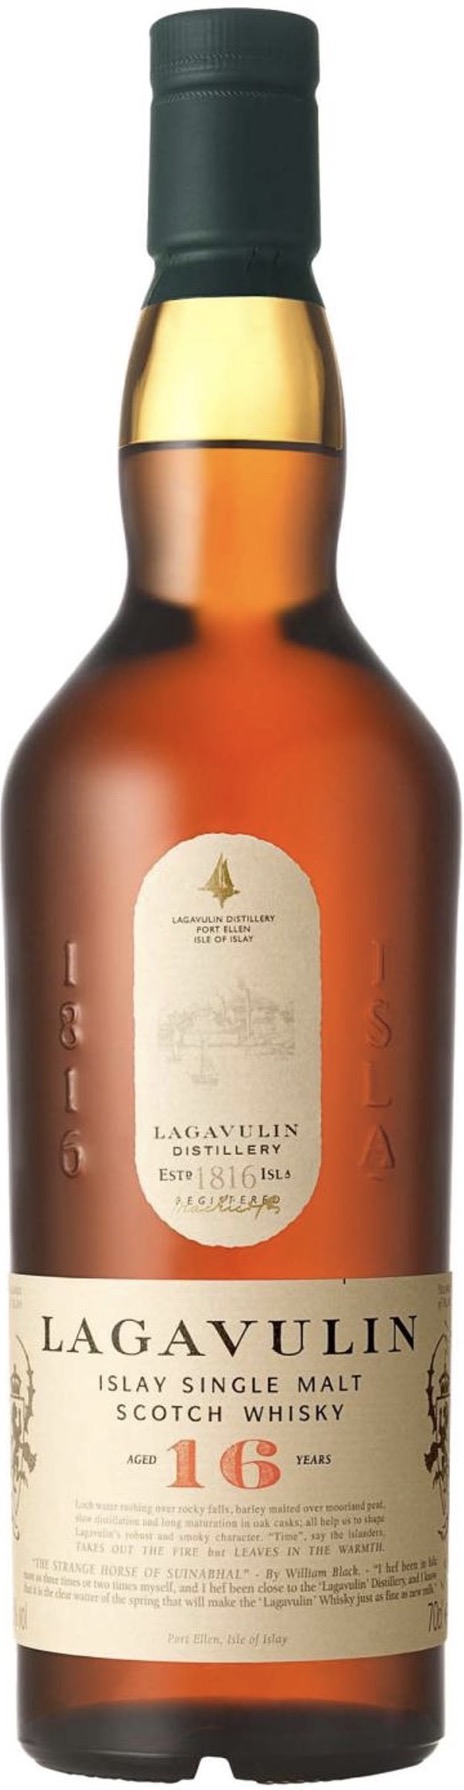 Lagavulin Islay Single Malt Scotch Whisky 16 Jahre 43% vol. 0,7L